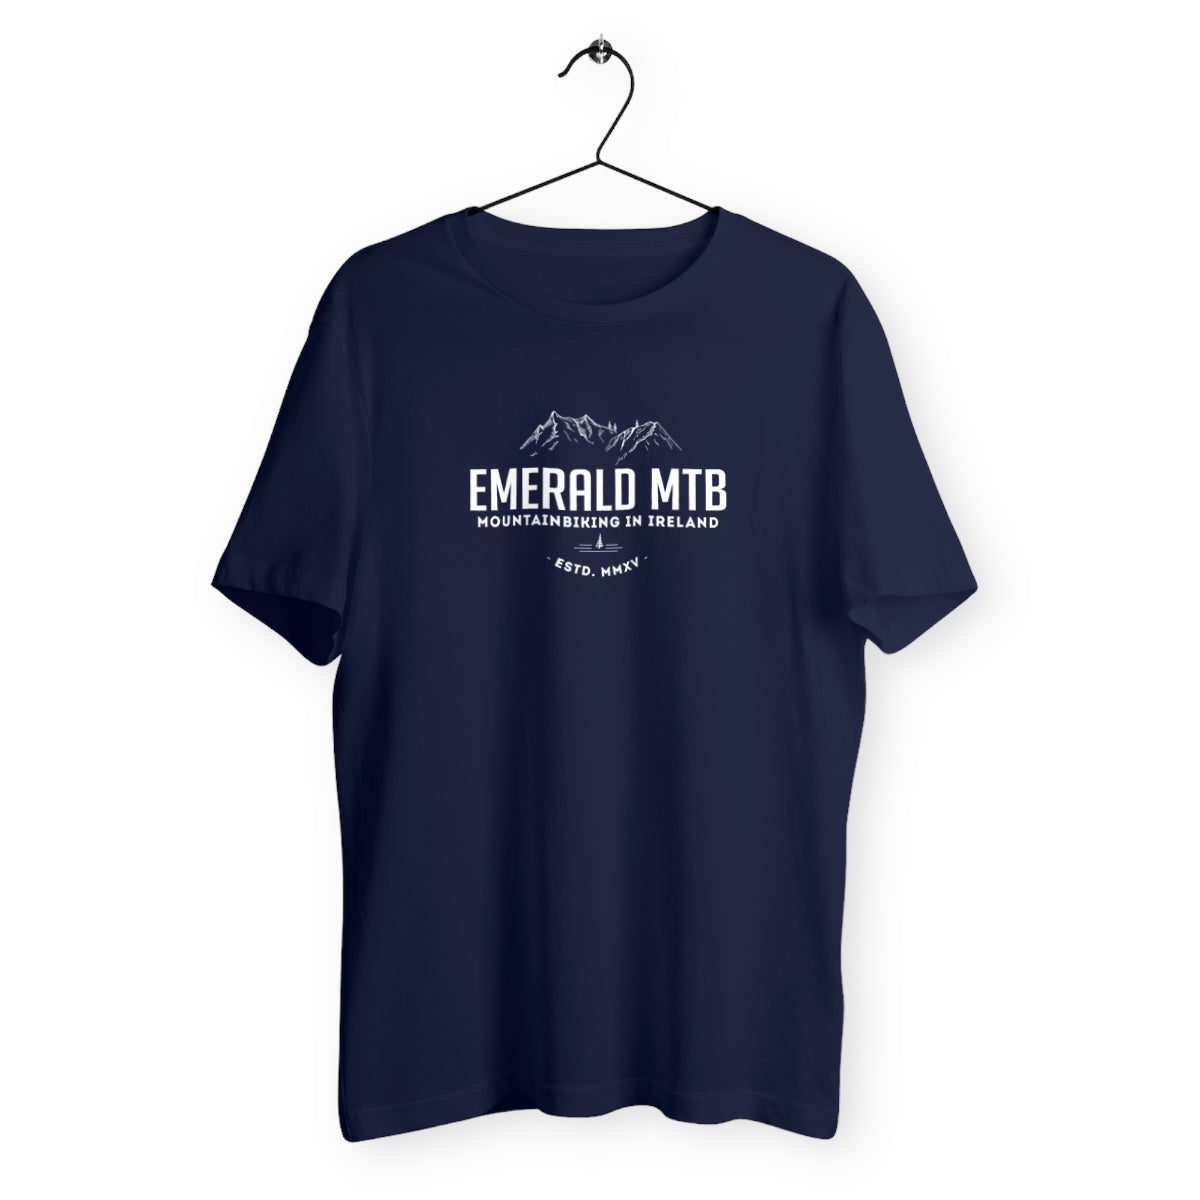 Emerald MTB t-shirt